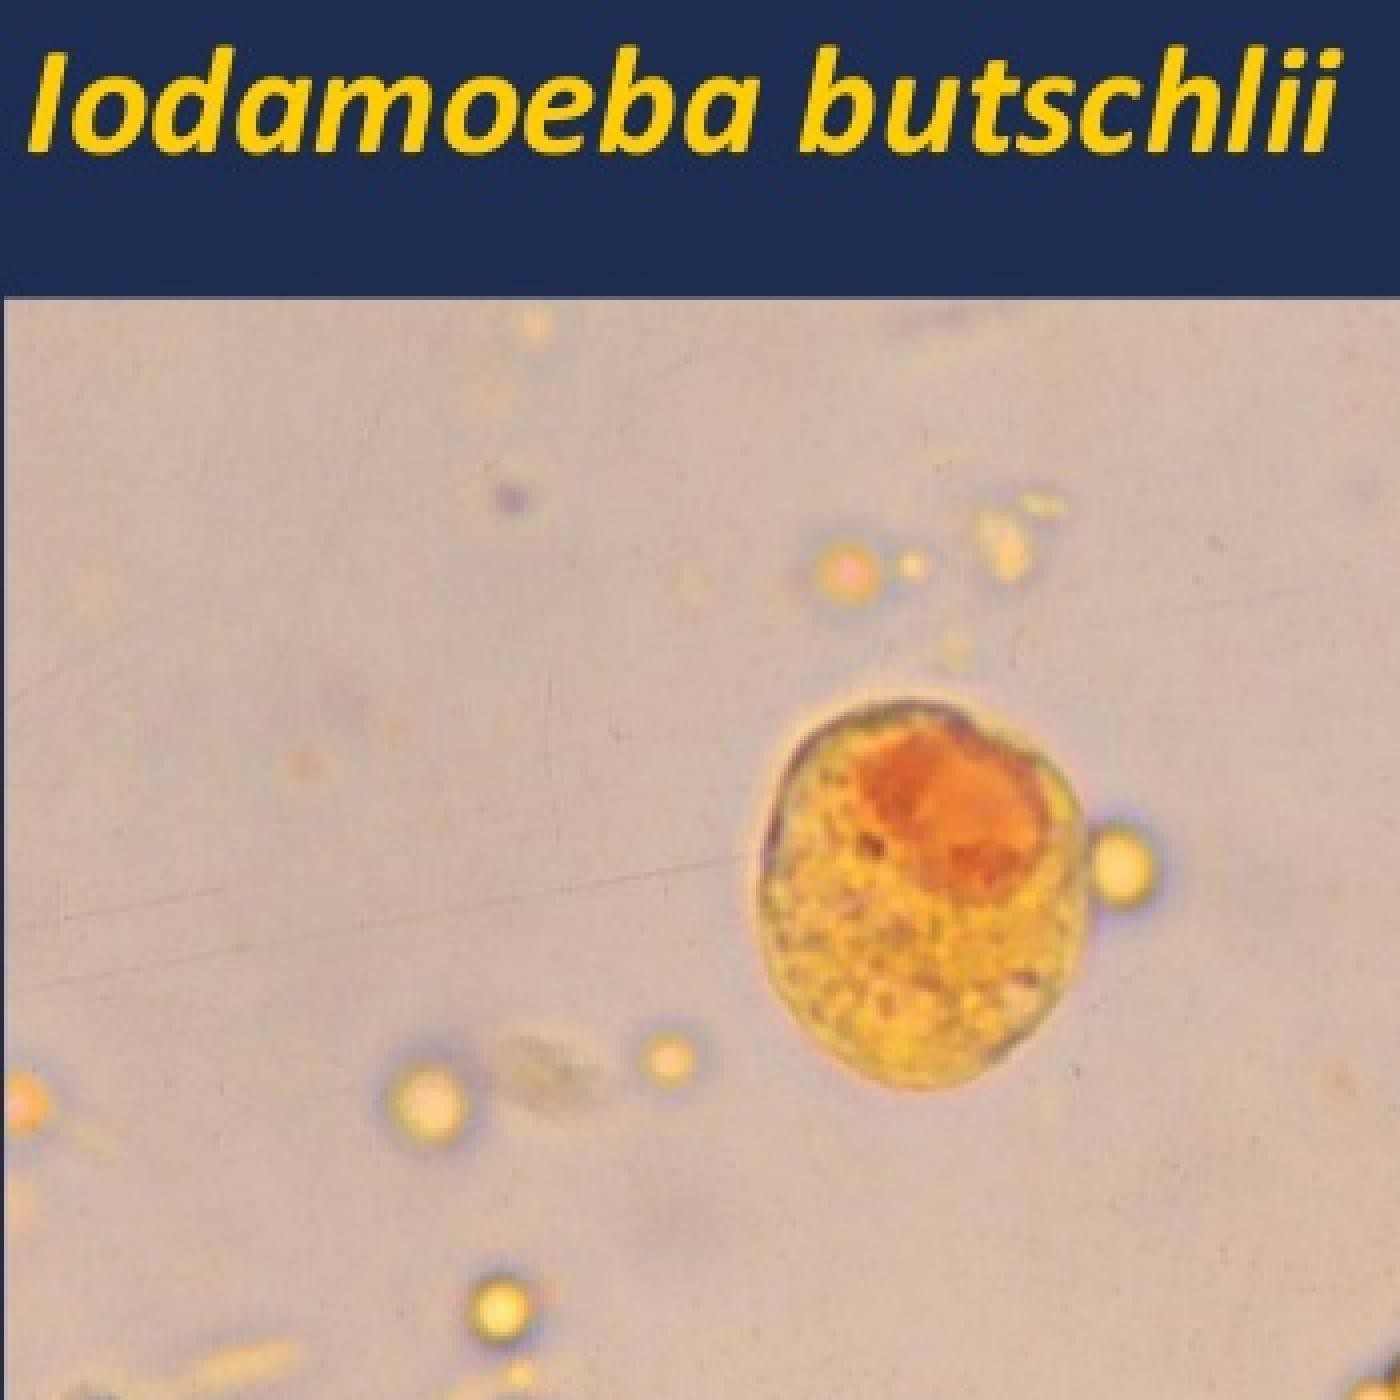 Entamoeba coli в кале. Entamoeba histolytica циста. Цисты Entamoeba. Iodamoeba Butschlii. Йодамеба Бючли.